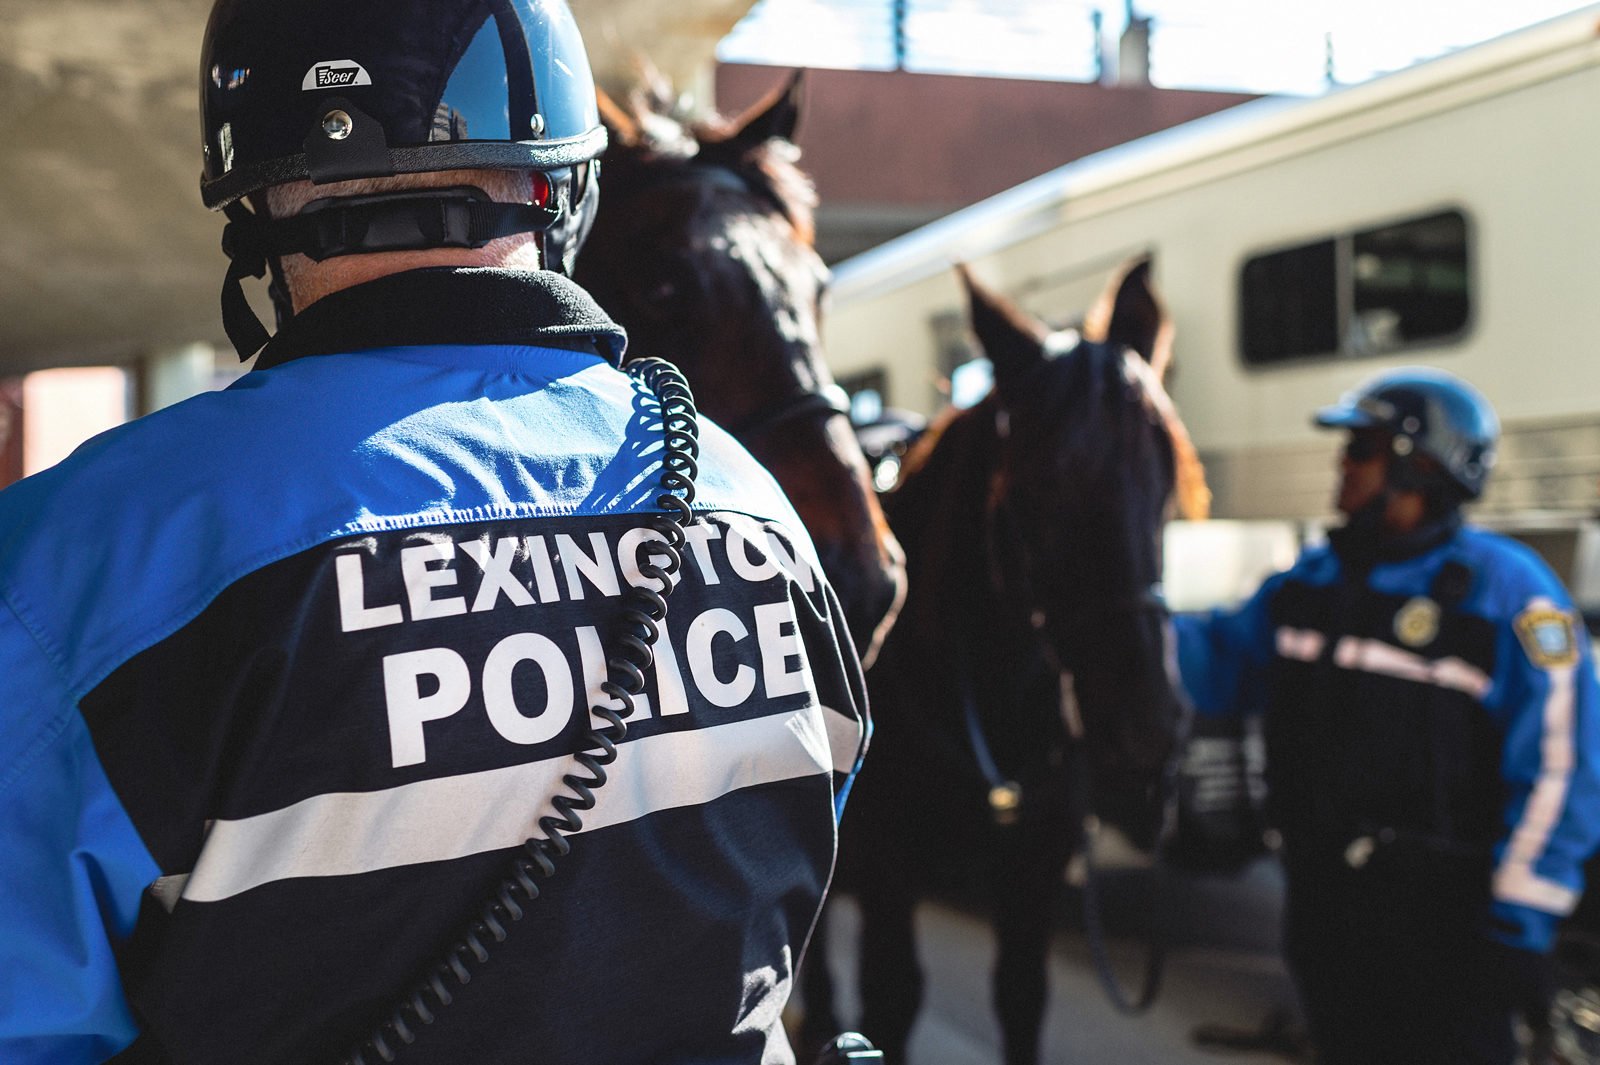 A Campaign for The City of Lexington Police By Bullhorn Creative